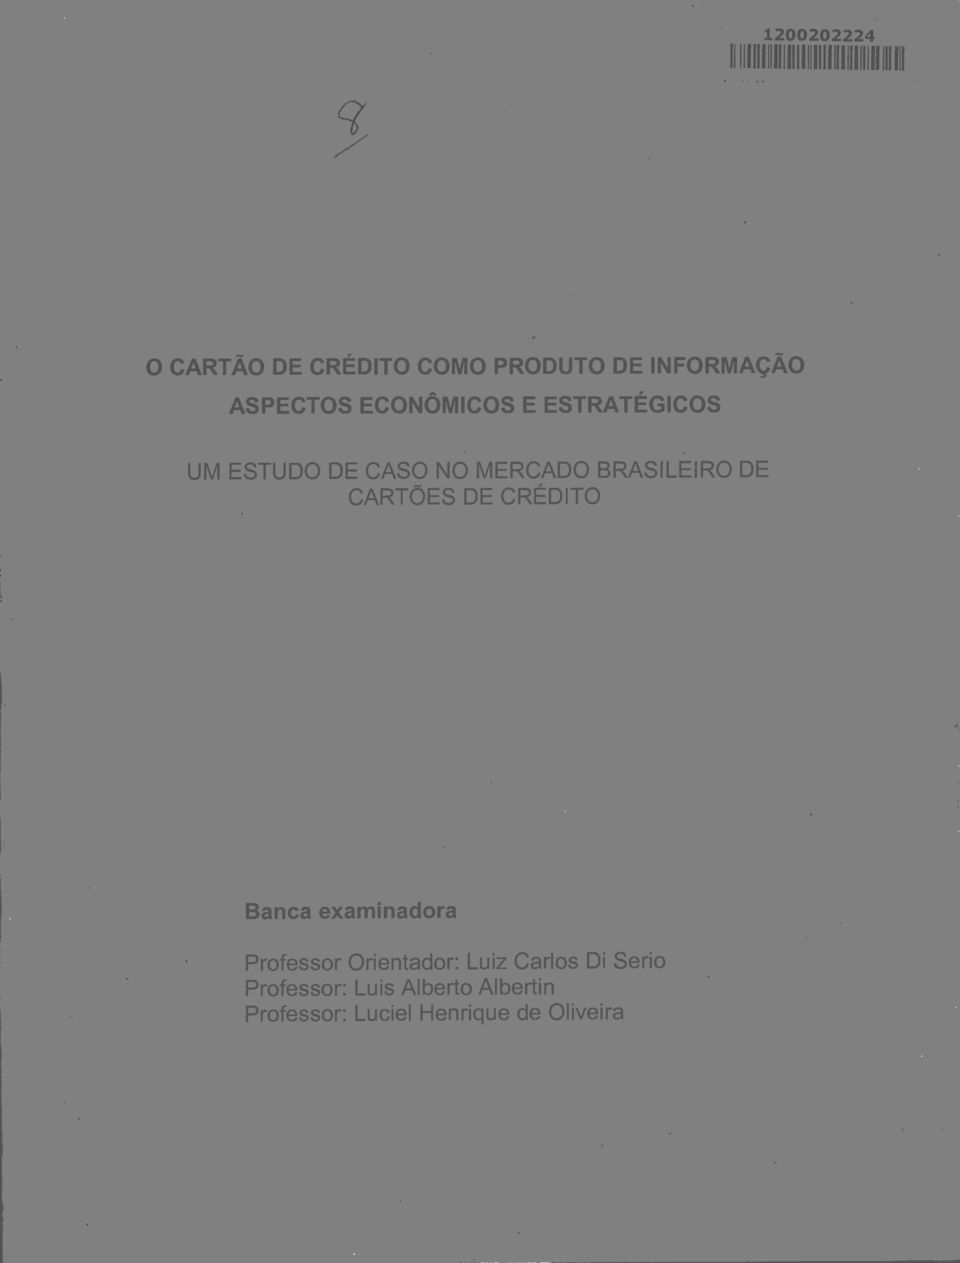 MERCADO BRASILEIRO CARTÕES DE CRÉDITO DE Banca examinadora Professor Orientador: